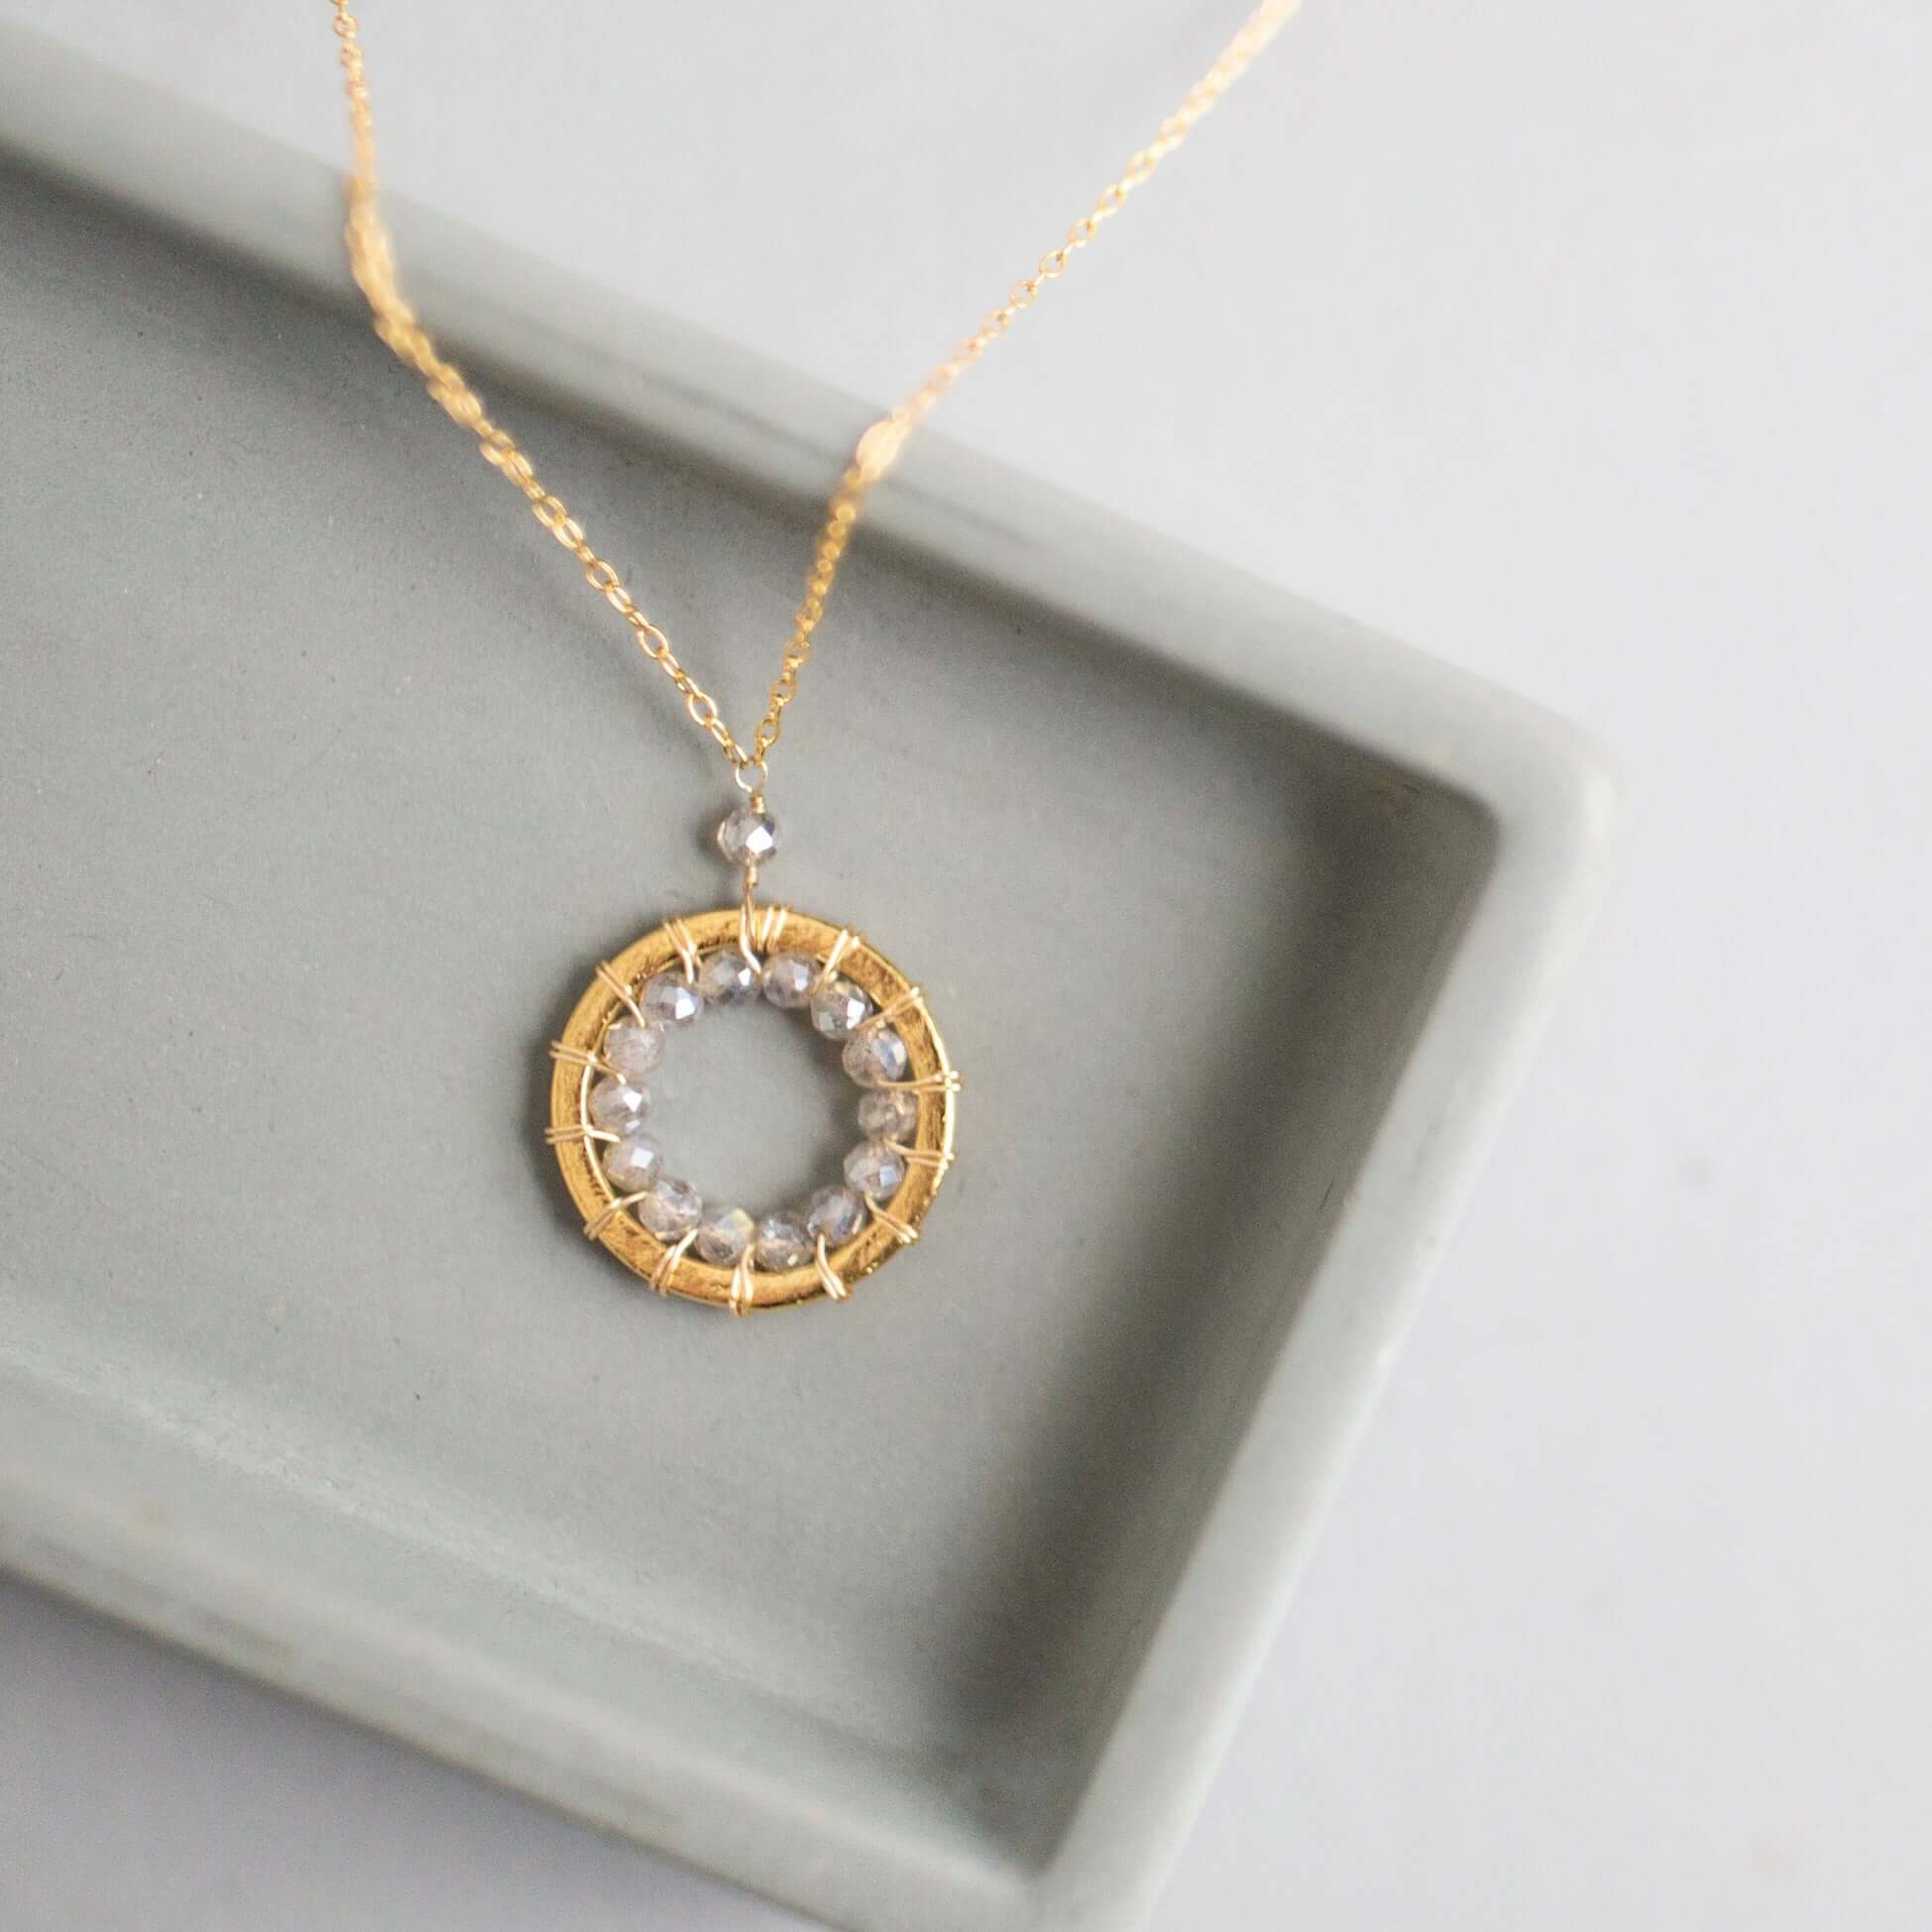 Mini Gold Circle Necklace with Labradorite Gemstones